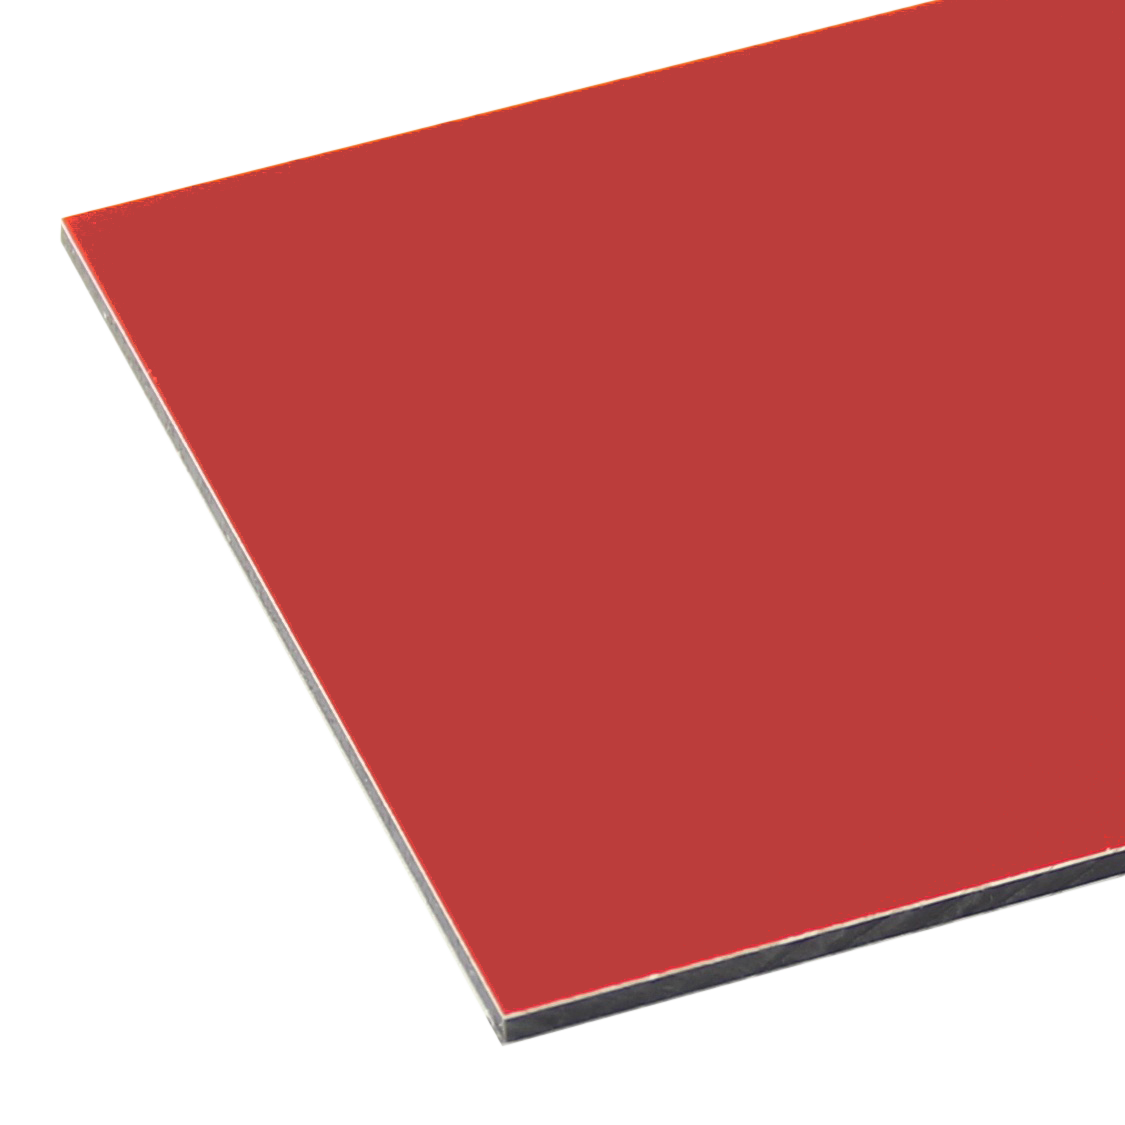 Alupanel 3020 Red Sheet | Plastock